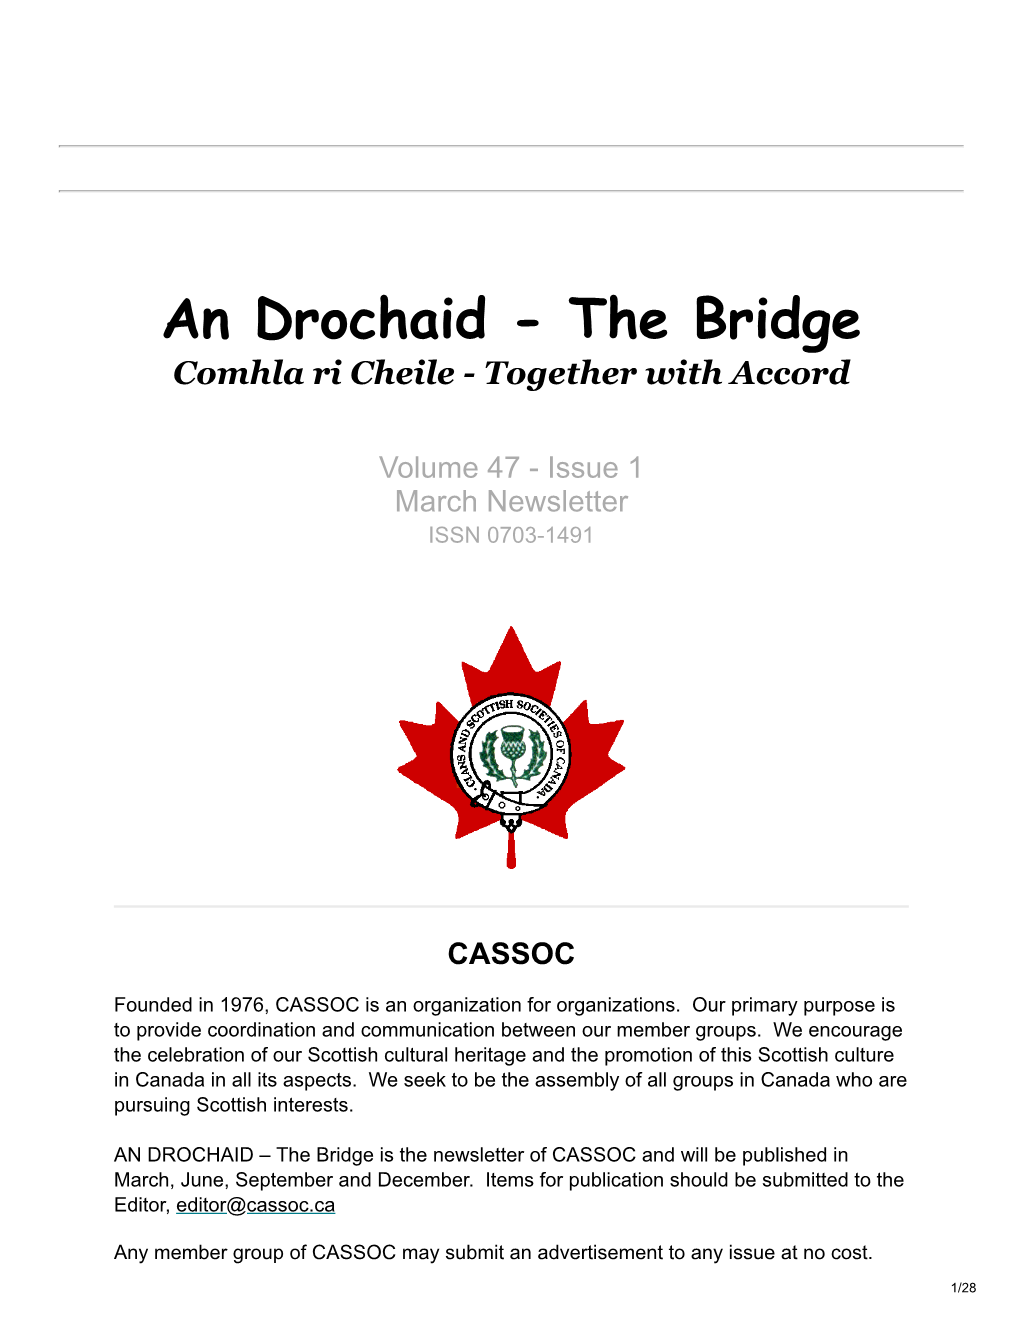 An Drochaid - the Bridge Comhla Ri Cheile - Together with Accord